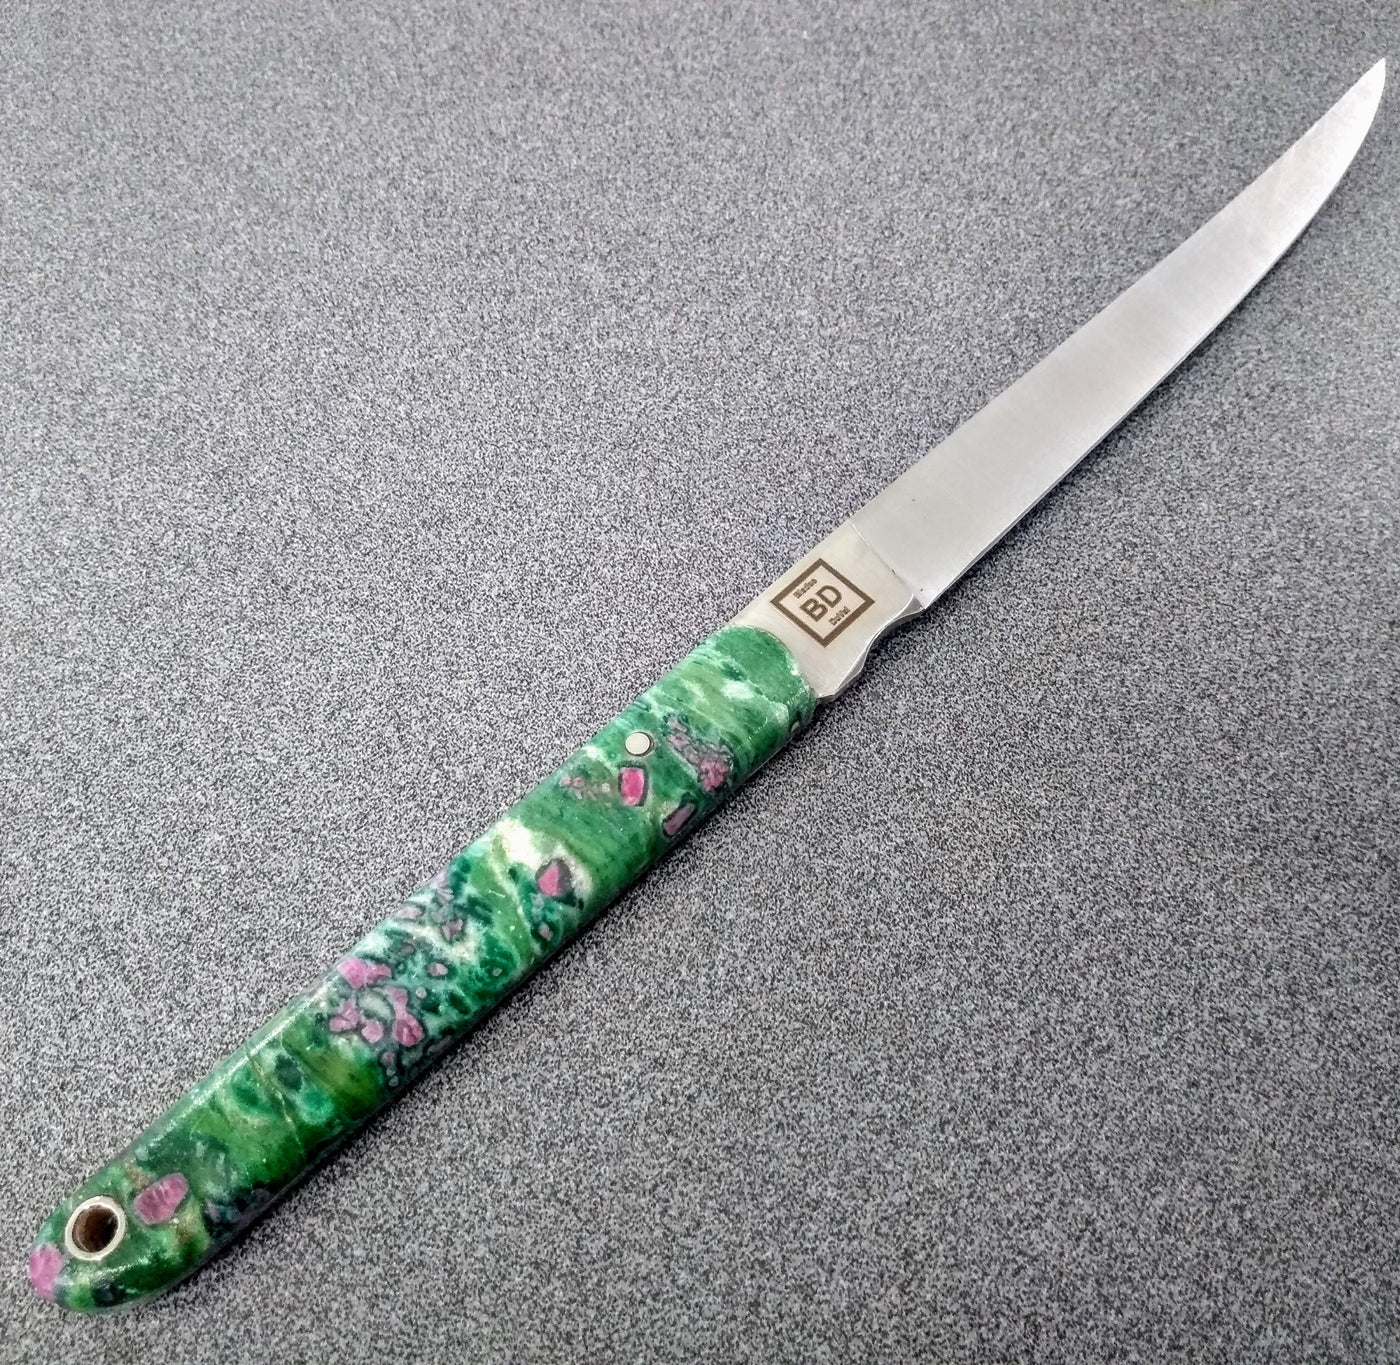 LOC-04 Filet Knife Ruby In Zoisite